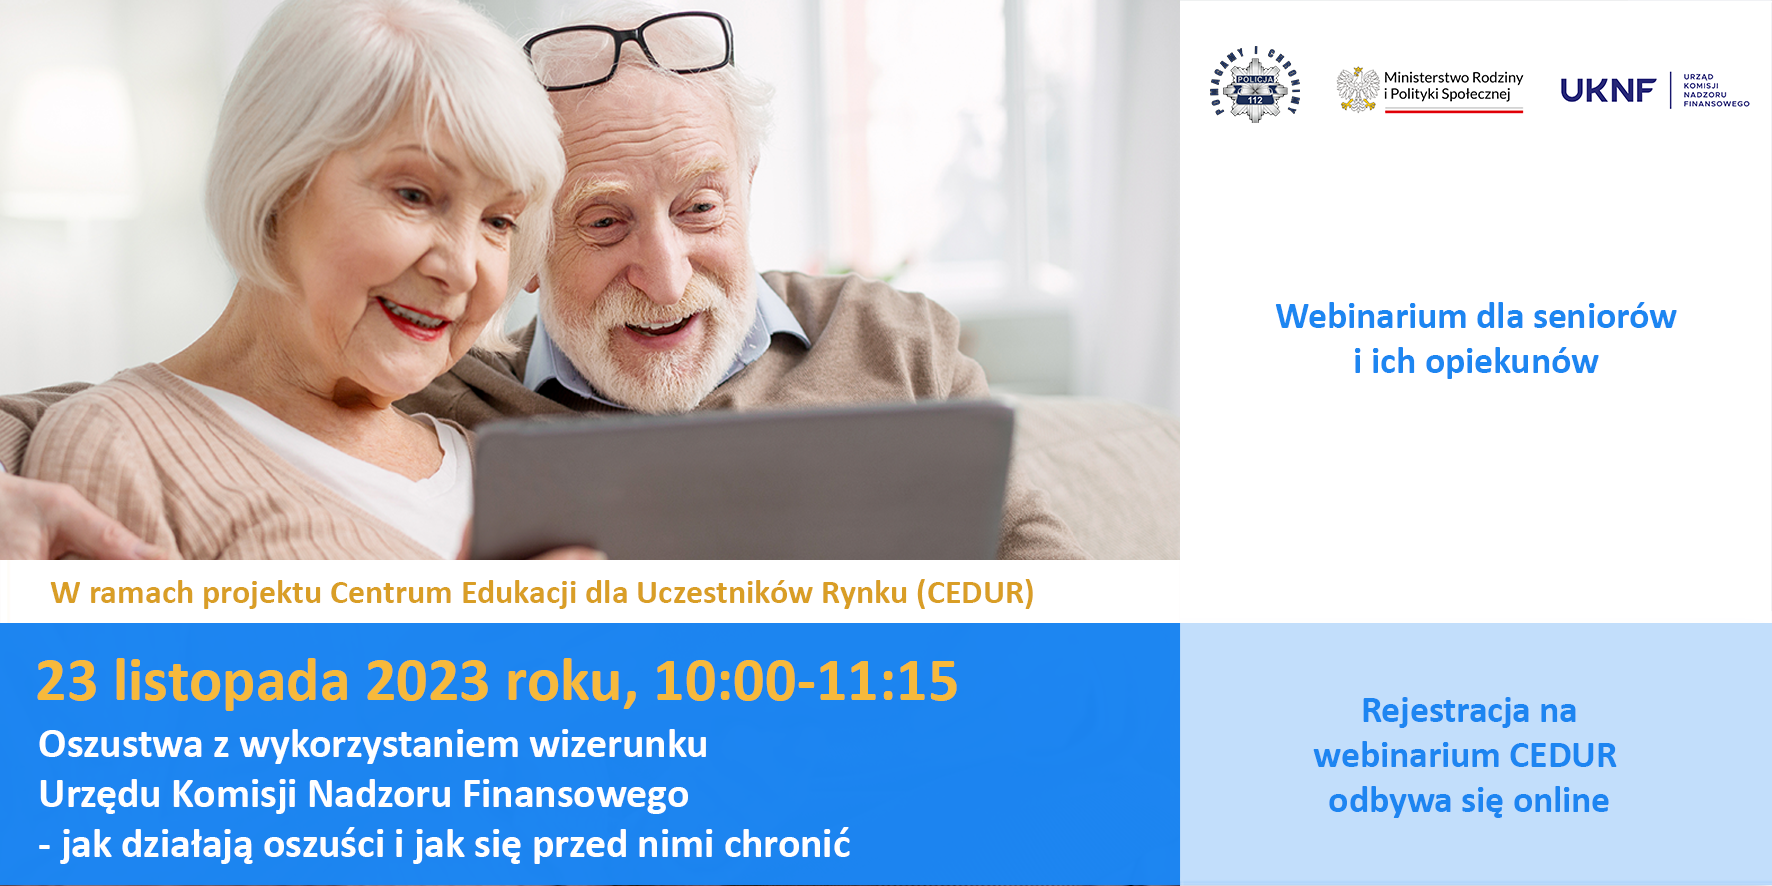 Plakat - webinarium CEDUR dla seniorów i ich opiekunów - 23 listopada 2023 roku